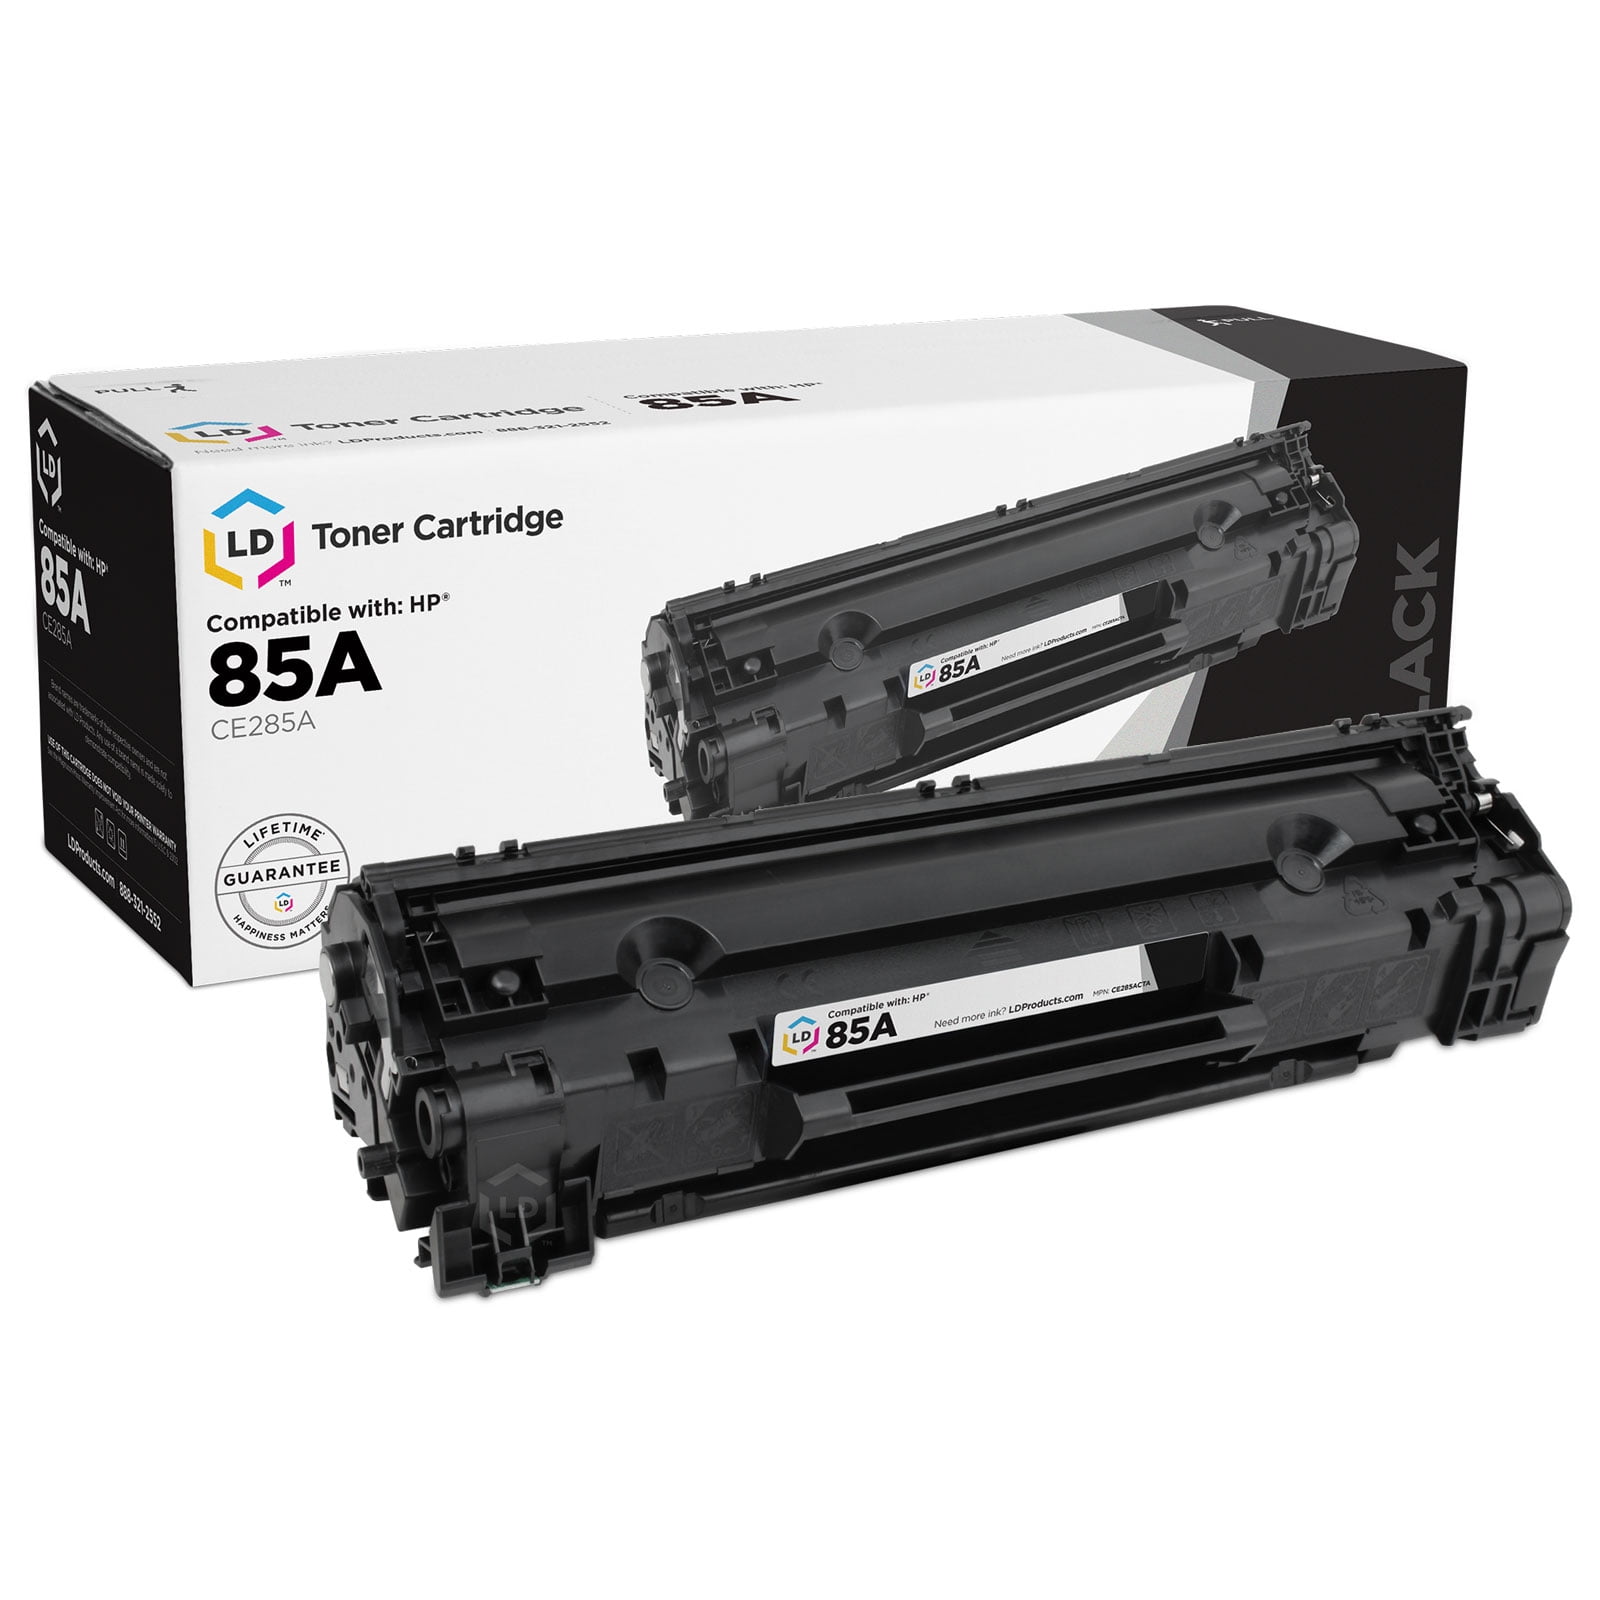 HP 2 Black Toner Cartridge fits for HP CE285A 85A LaserJet P1102 P1102W M1132 M1212 6941148507249 